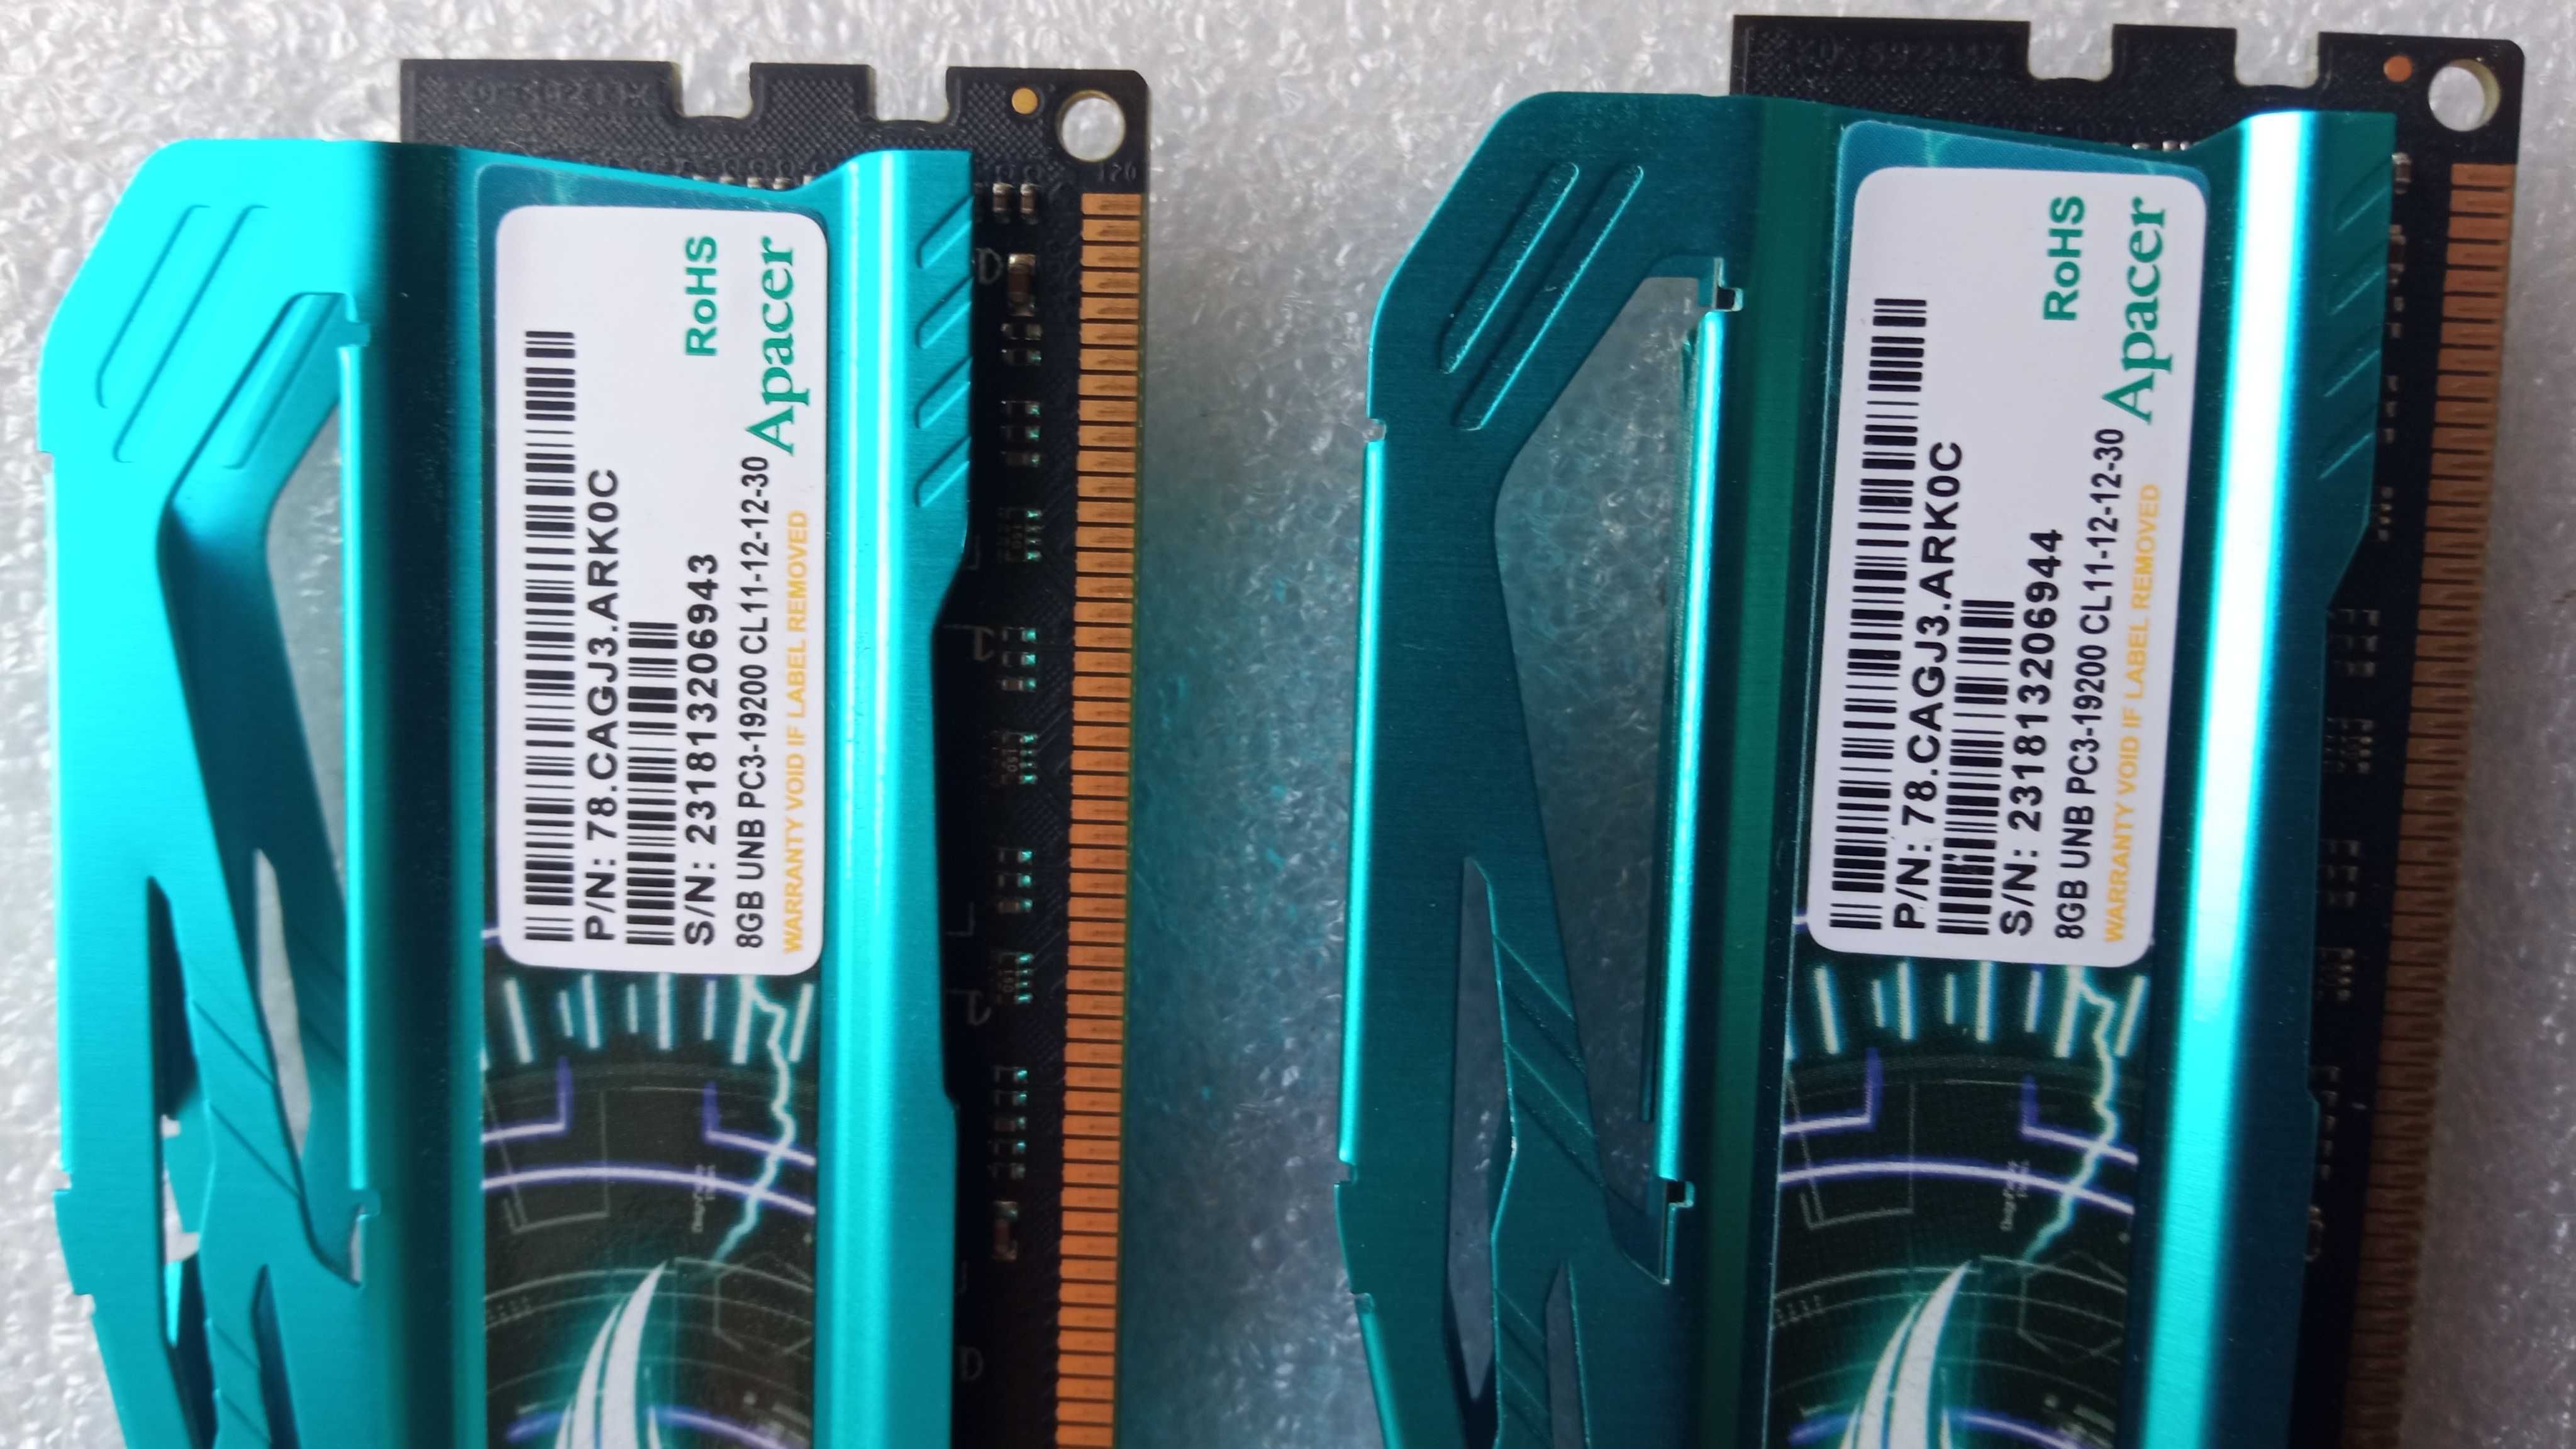 Оперативная память Apacer 16GB / 2 x 8GB DDR3 2400MHz Thunderbird  XMP